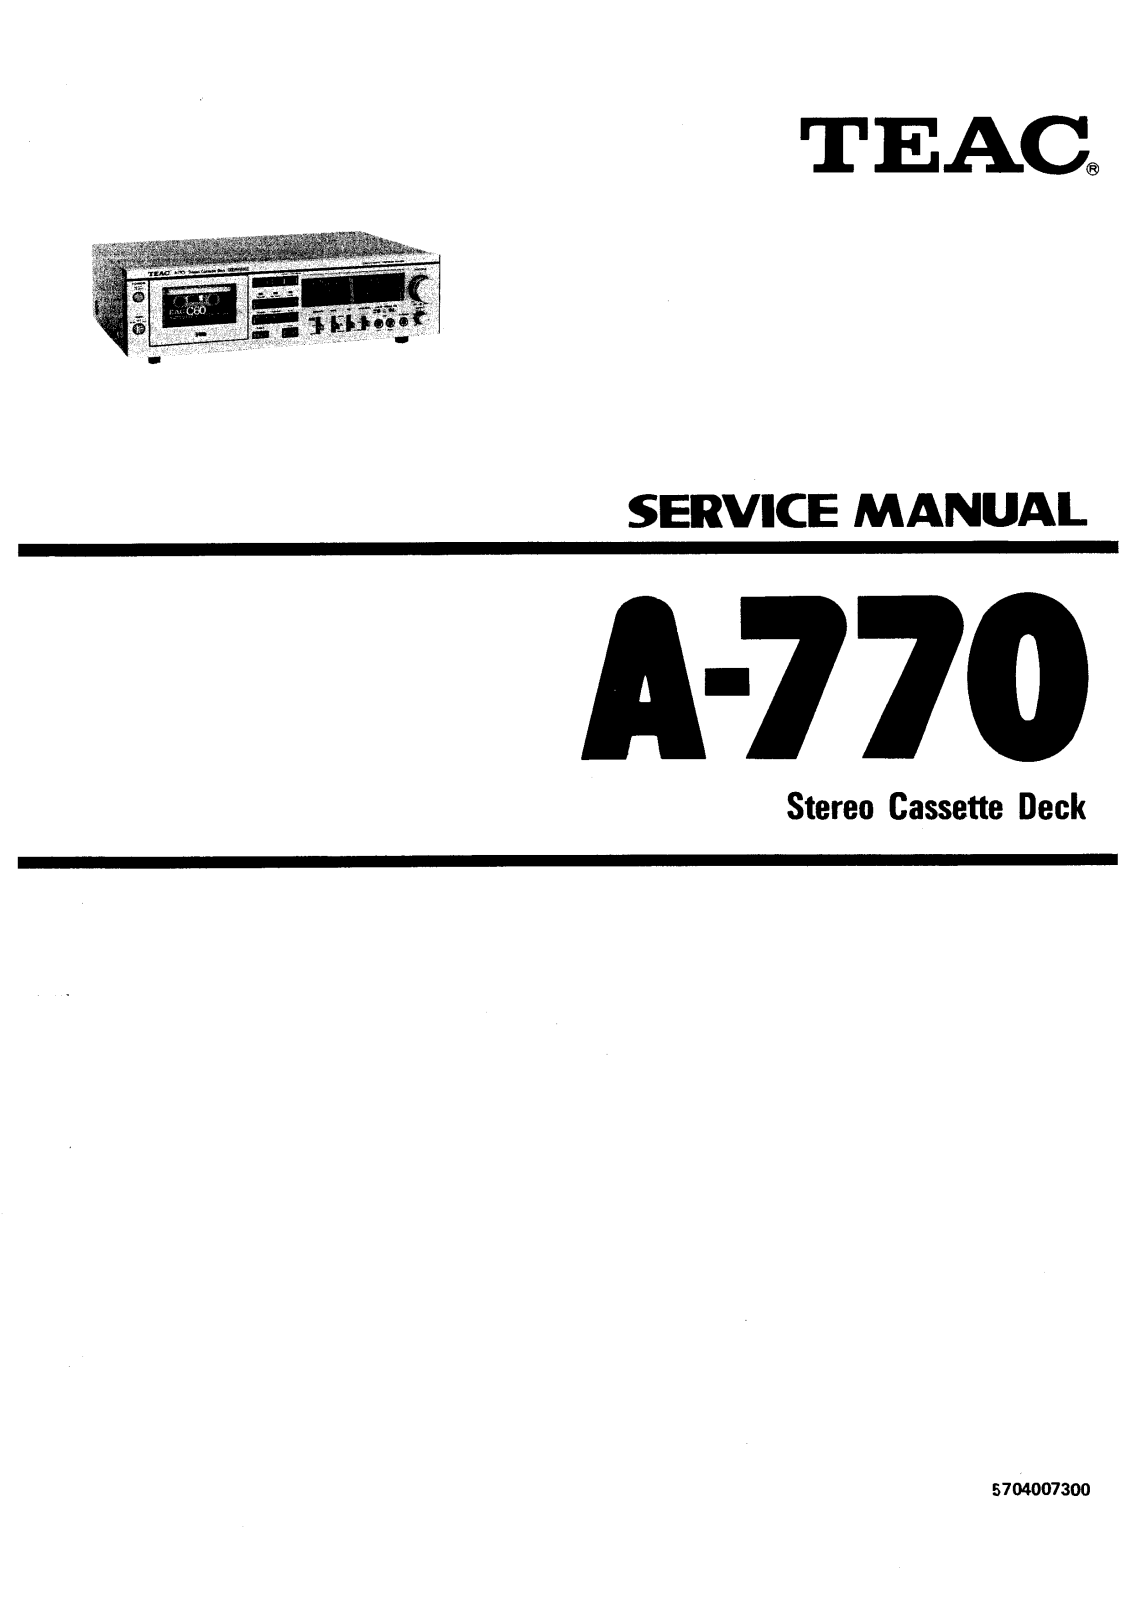 TEAC A-770 Service manual